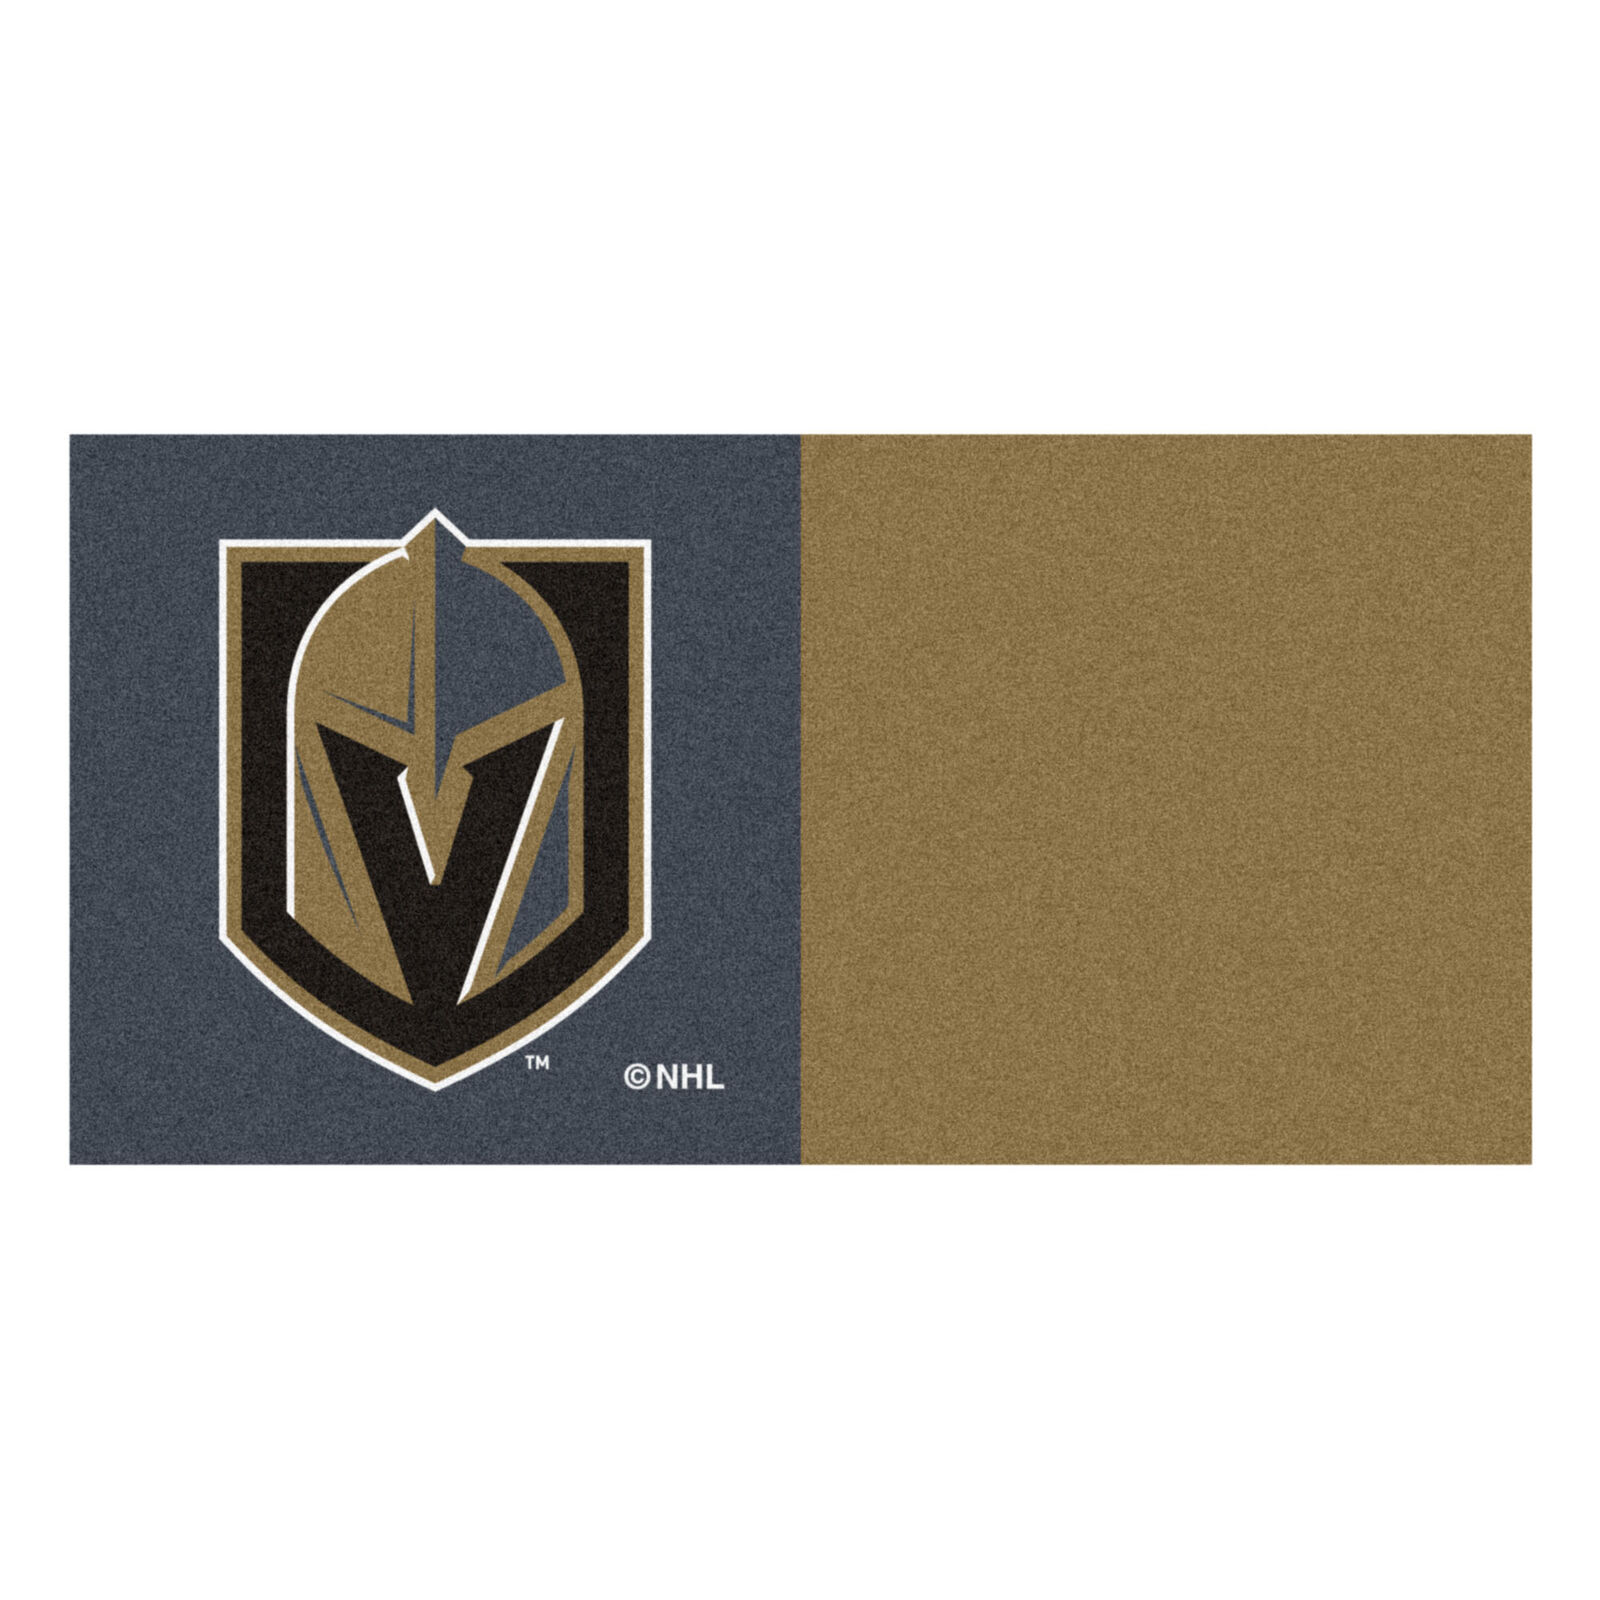 Fanmats 22900 NHL - Vegas Golden Knights Team Carpet Tiles 18